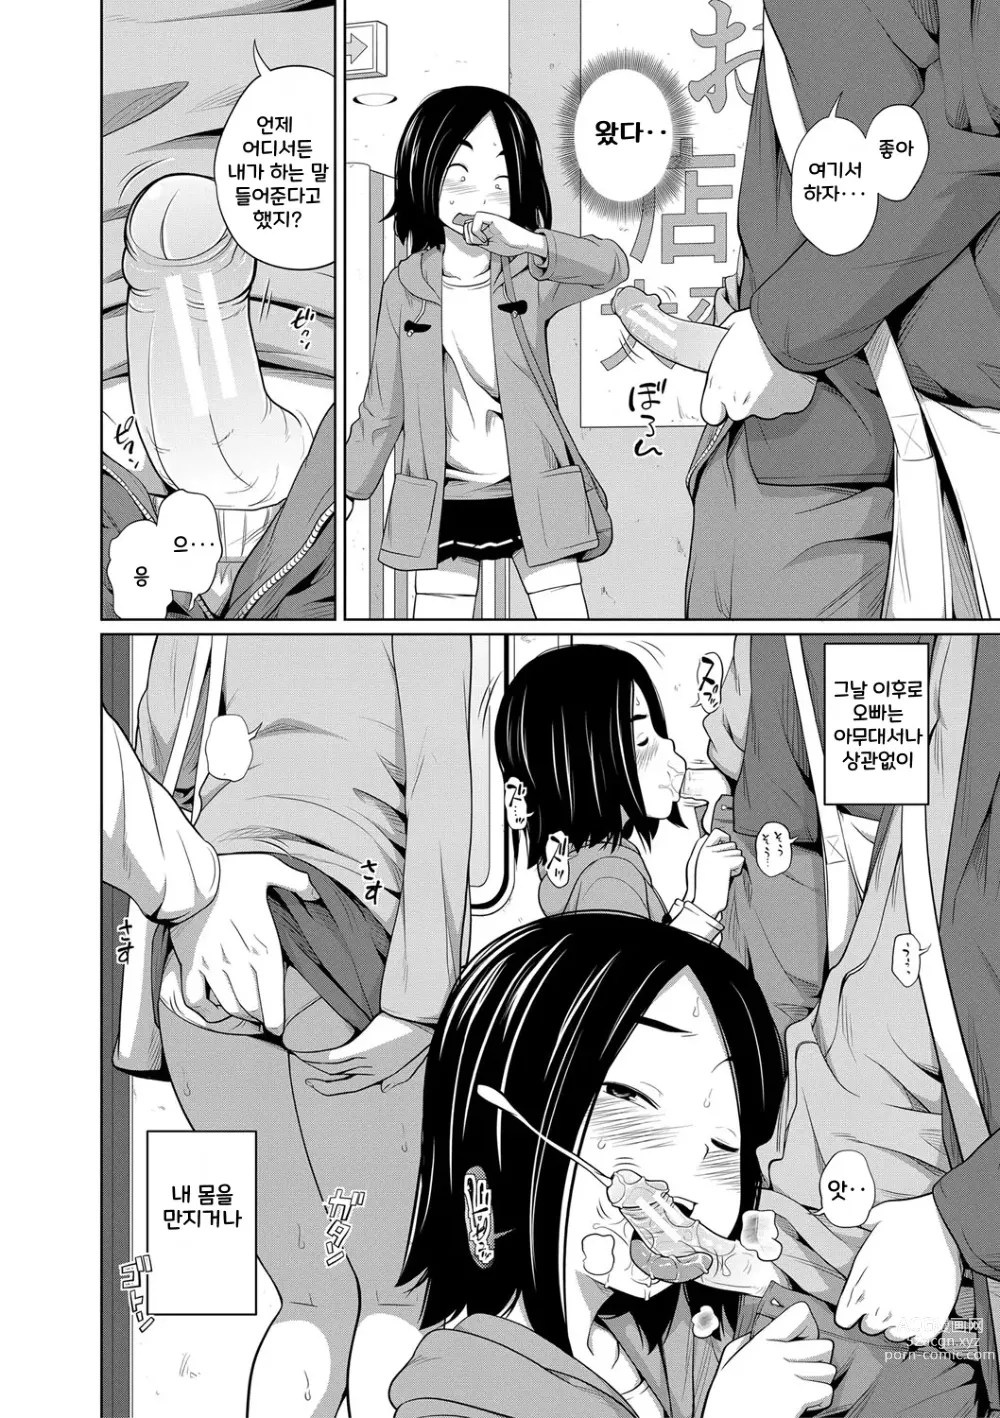 Page 195 of manga Imouto Access - Sister Access